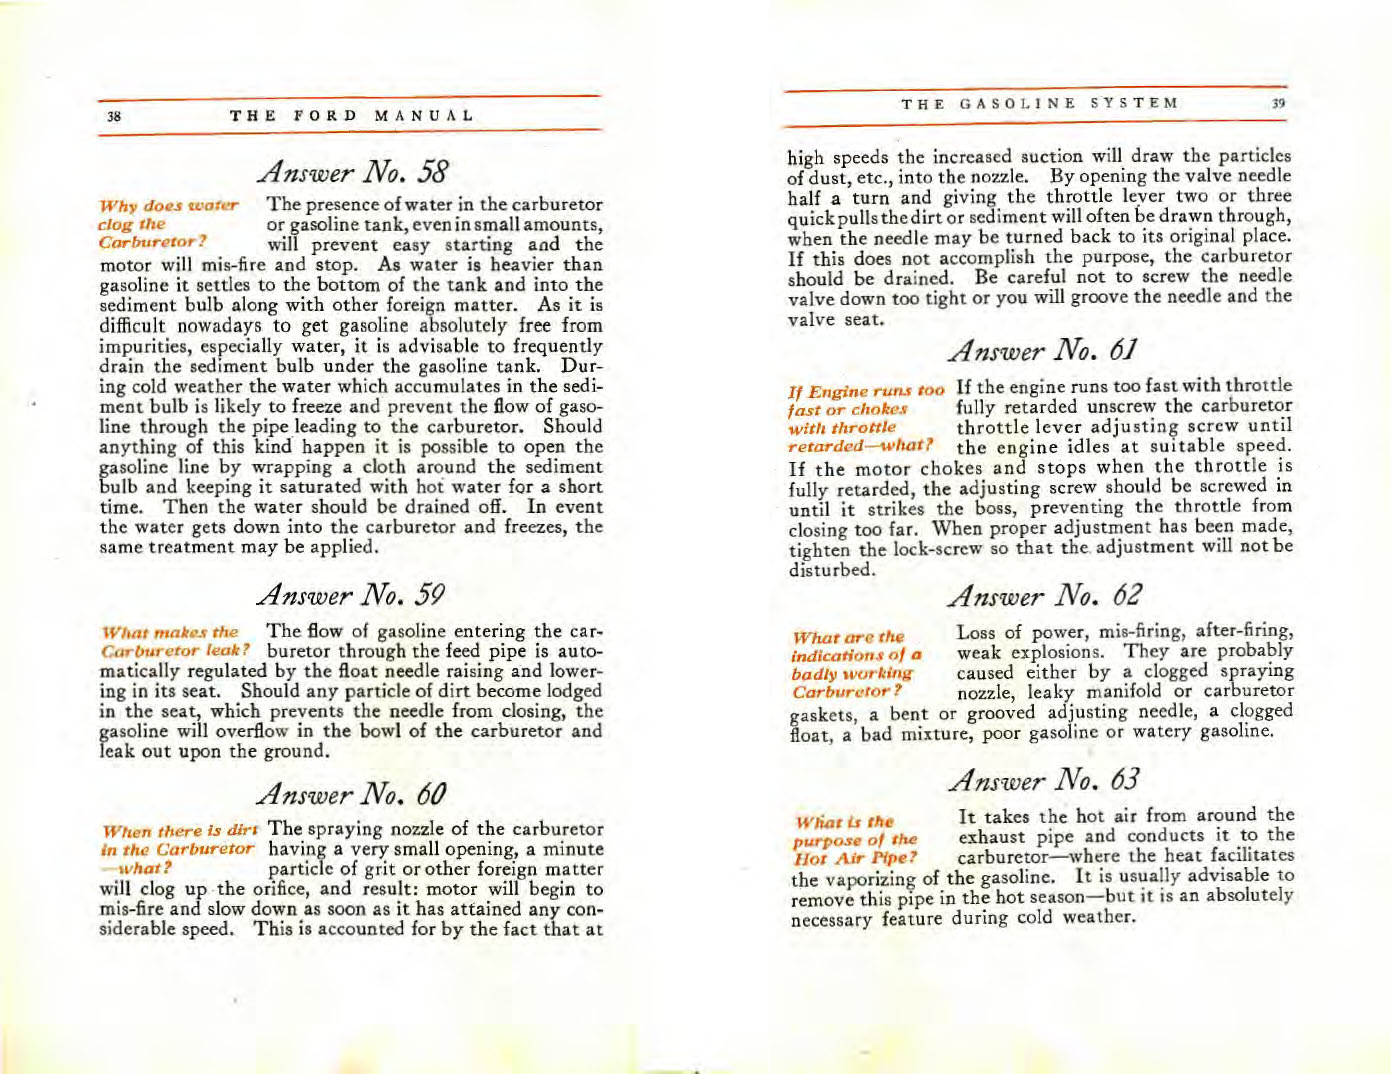 n_1915 Ford Owners Manual-38-39.jpg